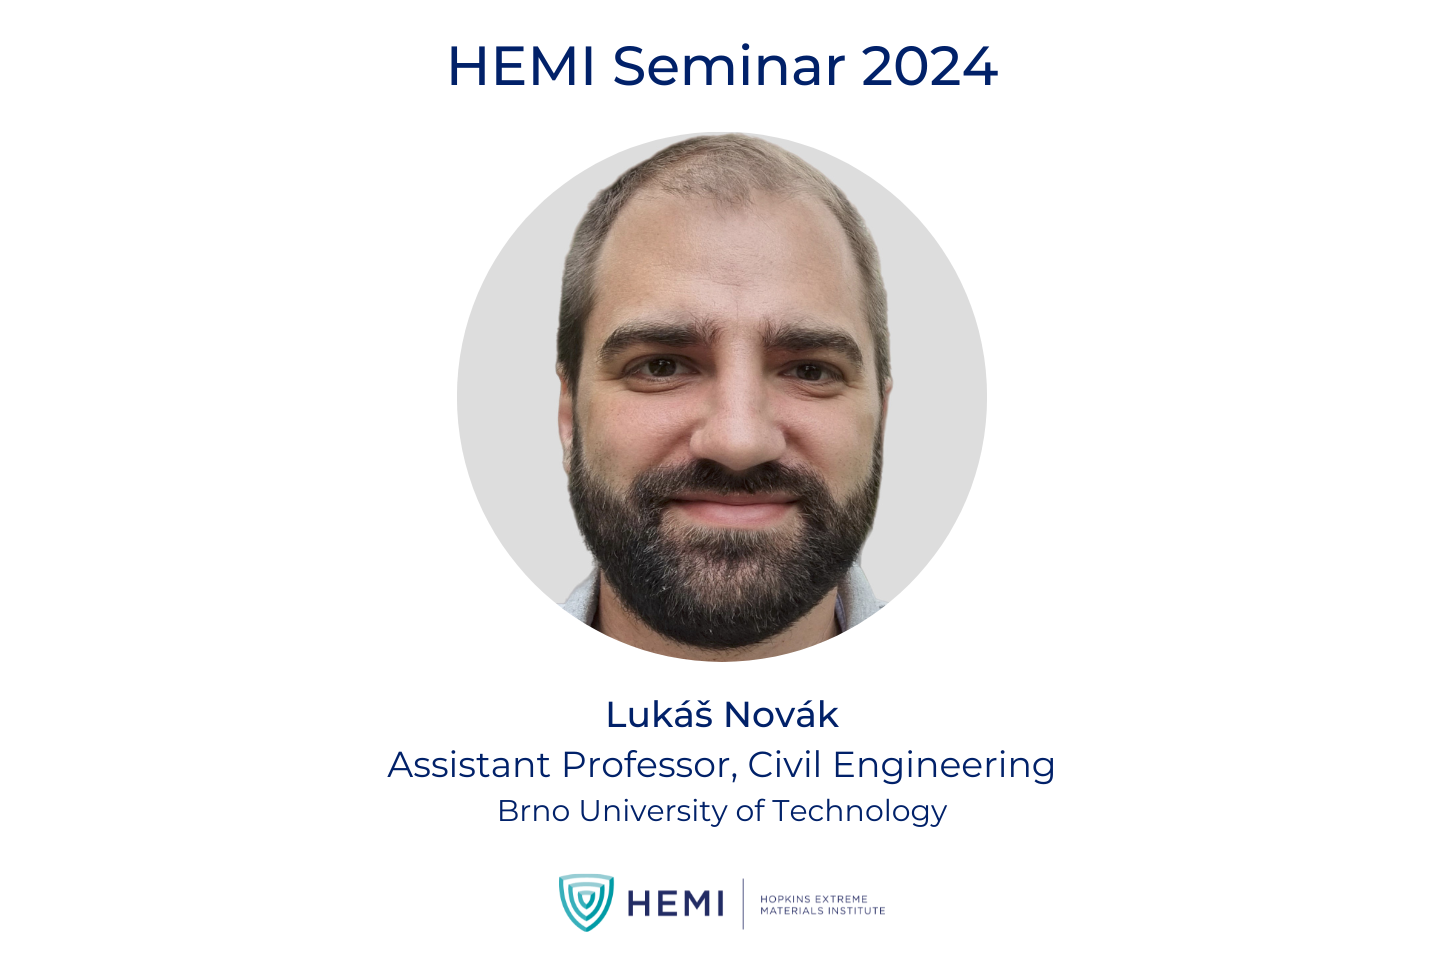 Headshot of Lukáš Novák with HEMI logo and text: "HEMI Seminar 2024, Lukáš Novák, Assistant Professor, Civil Engineering, Brno University of Technology"